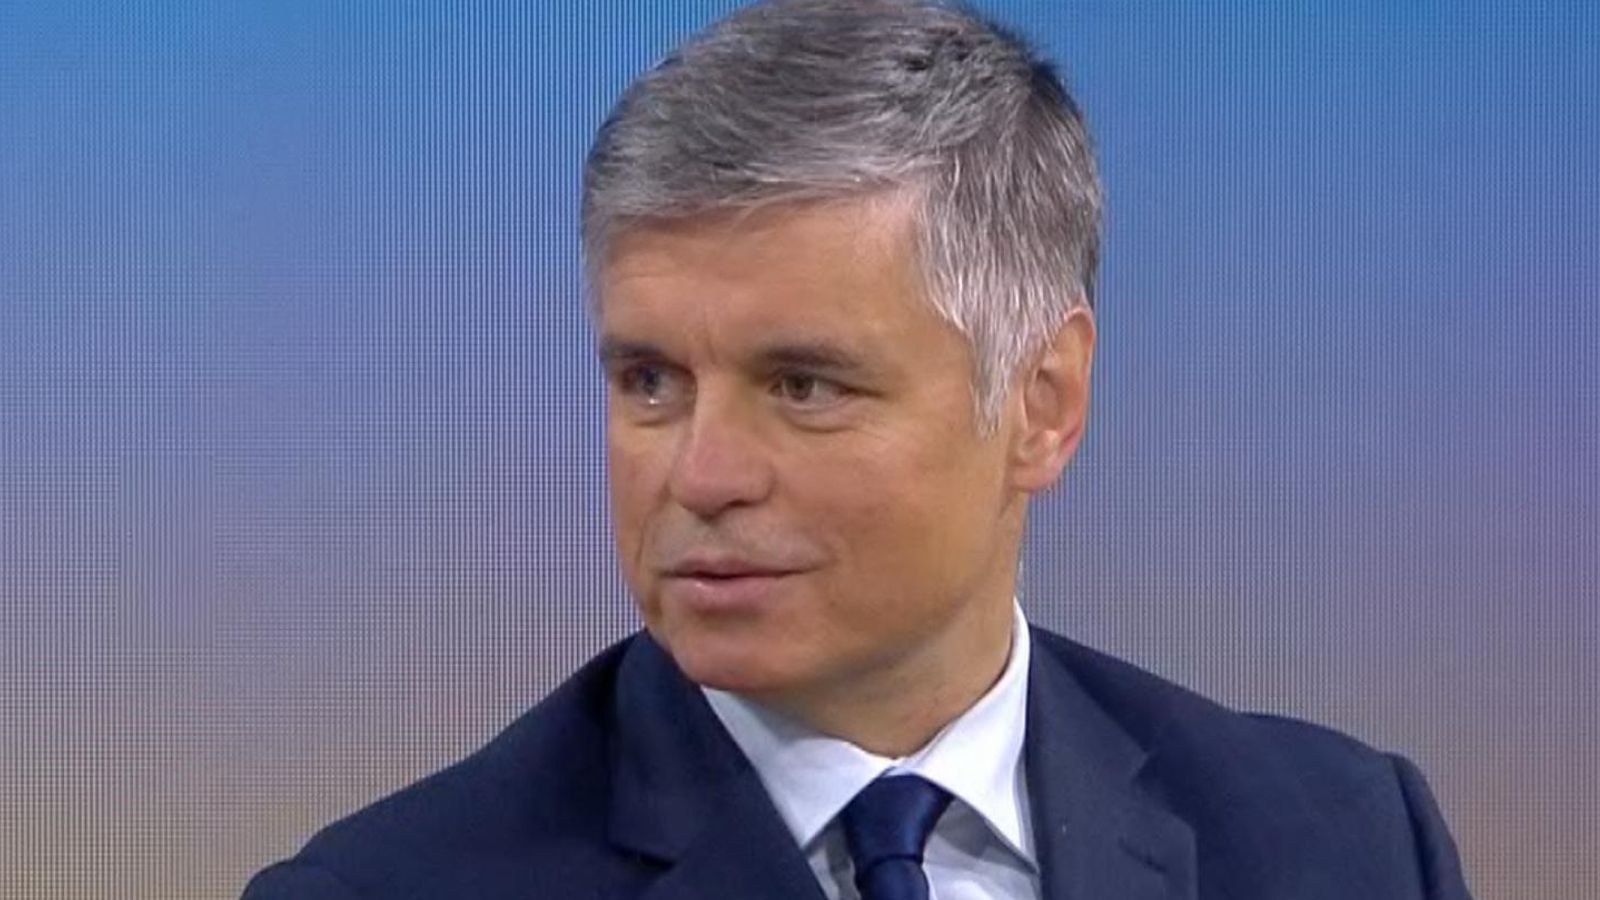 Ukraine's UK ambassador criticised 'sarcastic' Zelenskyy in Sky News interview days before sacking